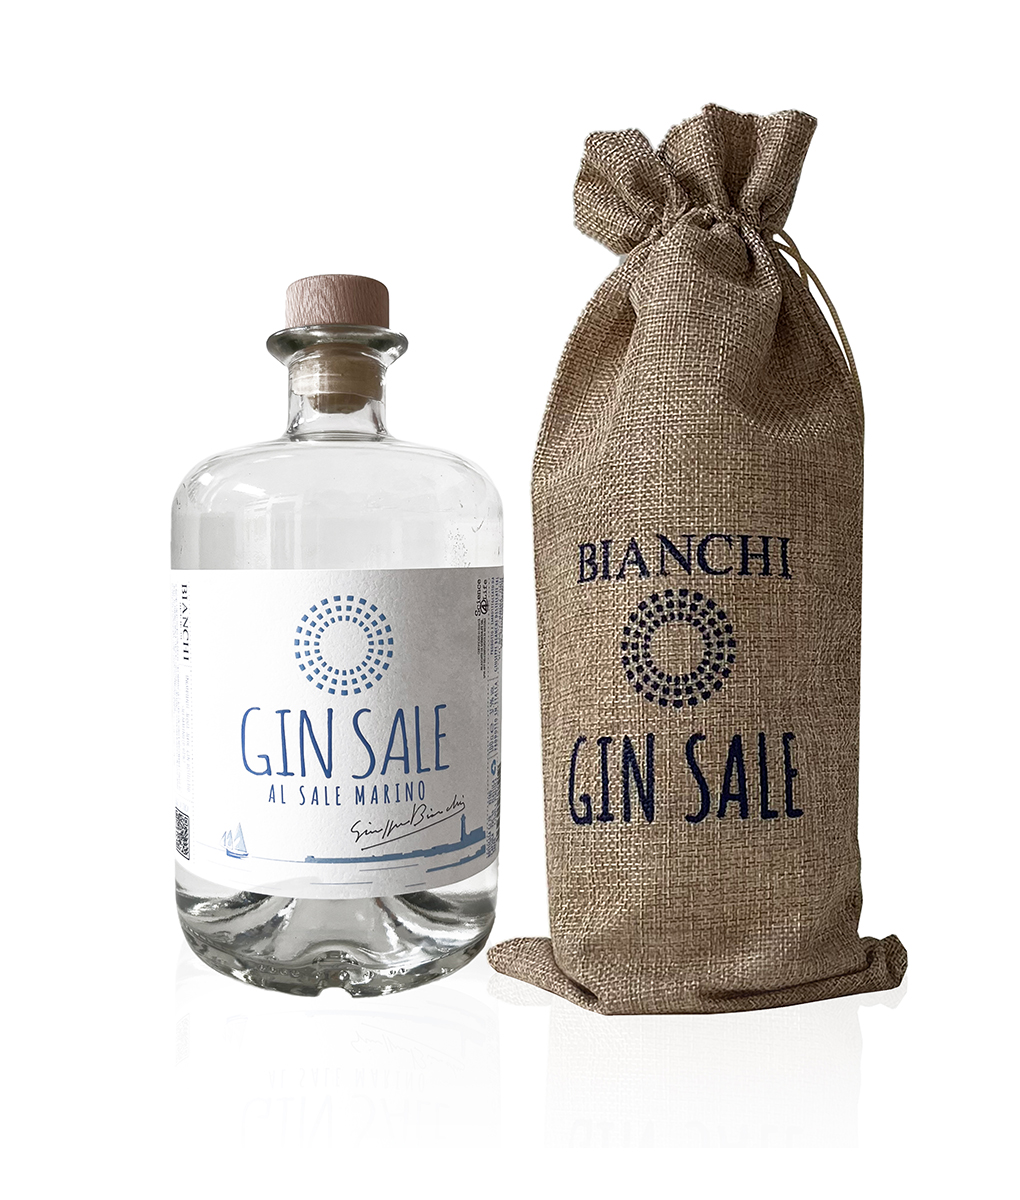 GIN SALE High Quality Italian Gin